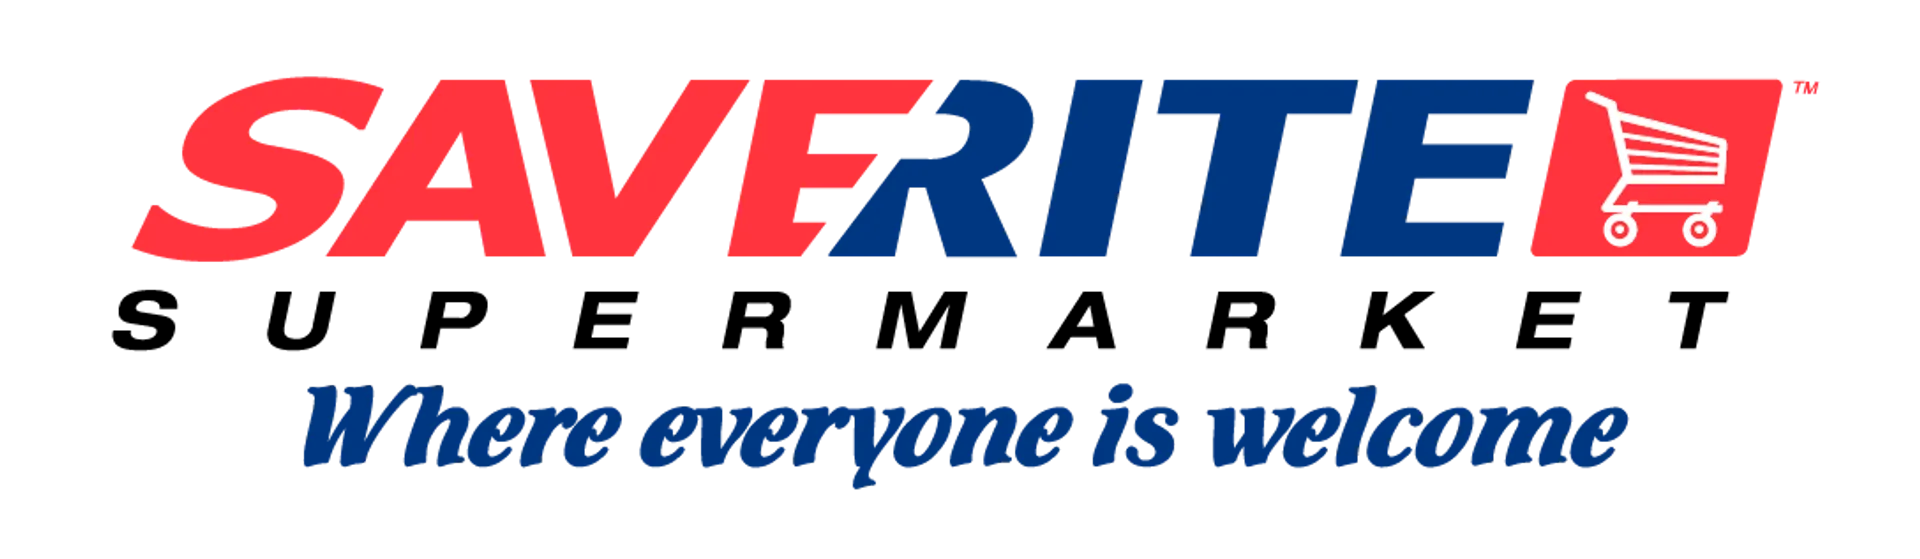 SAVERITE logo. Current weekly ad